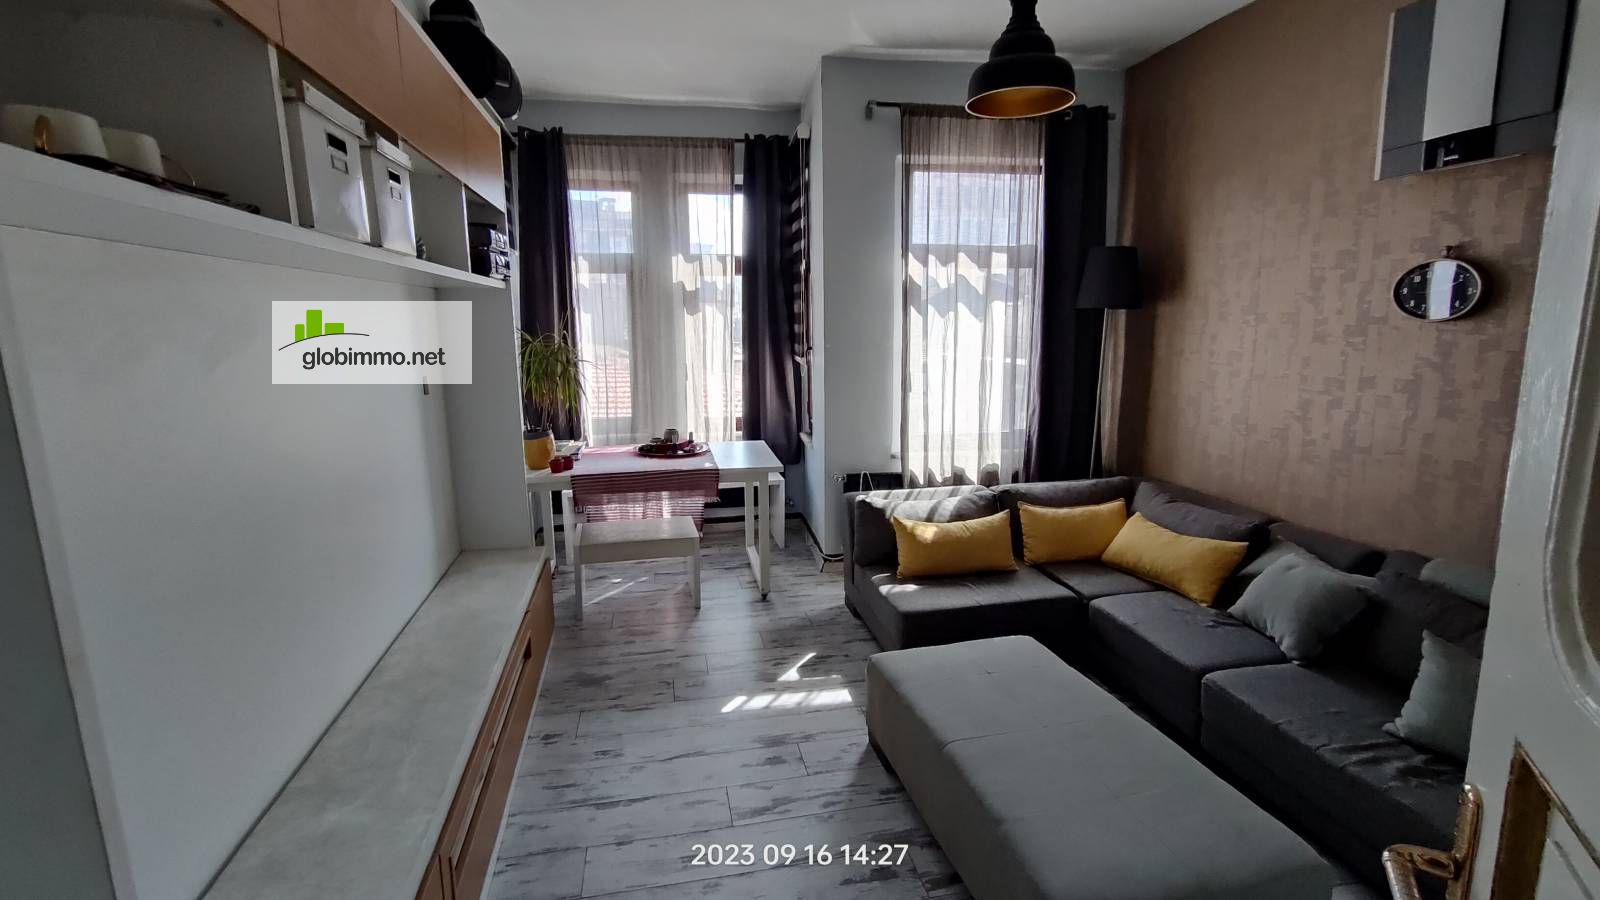 3 bedroom apartment Istanbul, Süslü Saksı Sokak, Renovated 3-bedroom apartment for rent next to Taksim